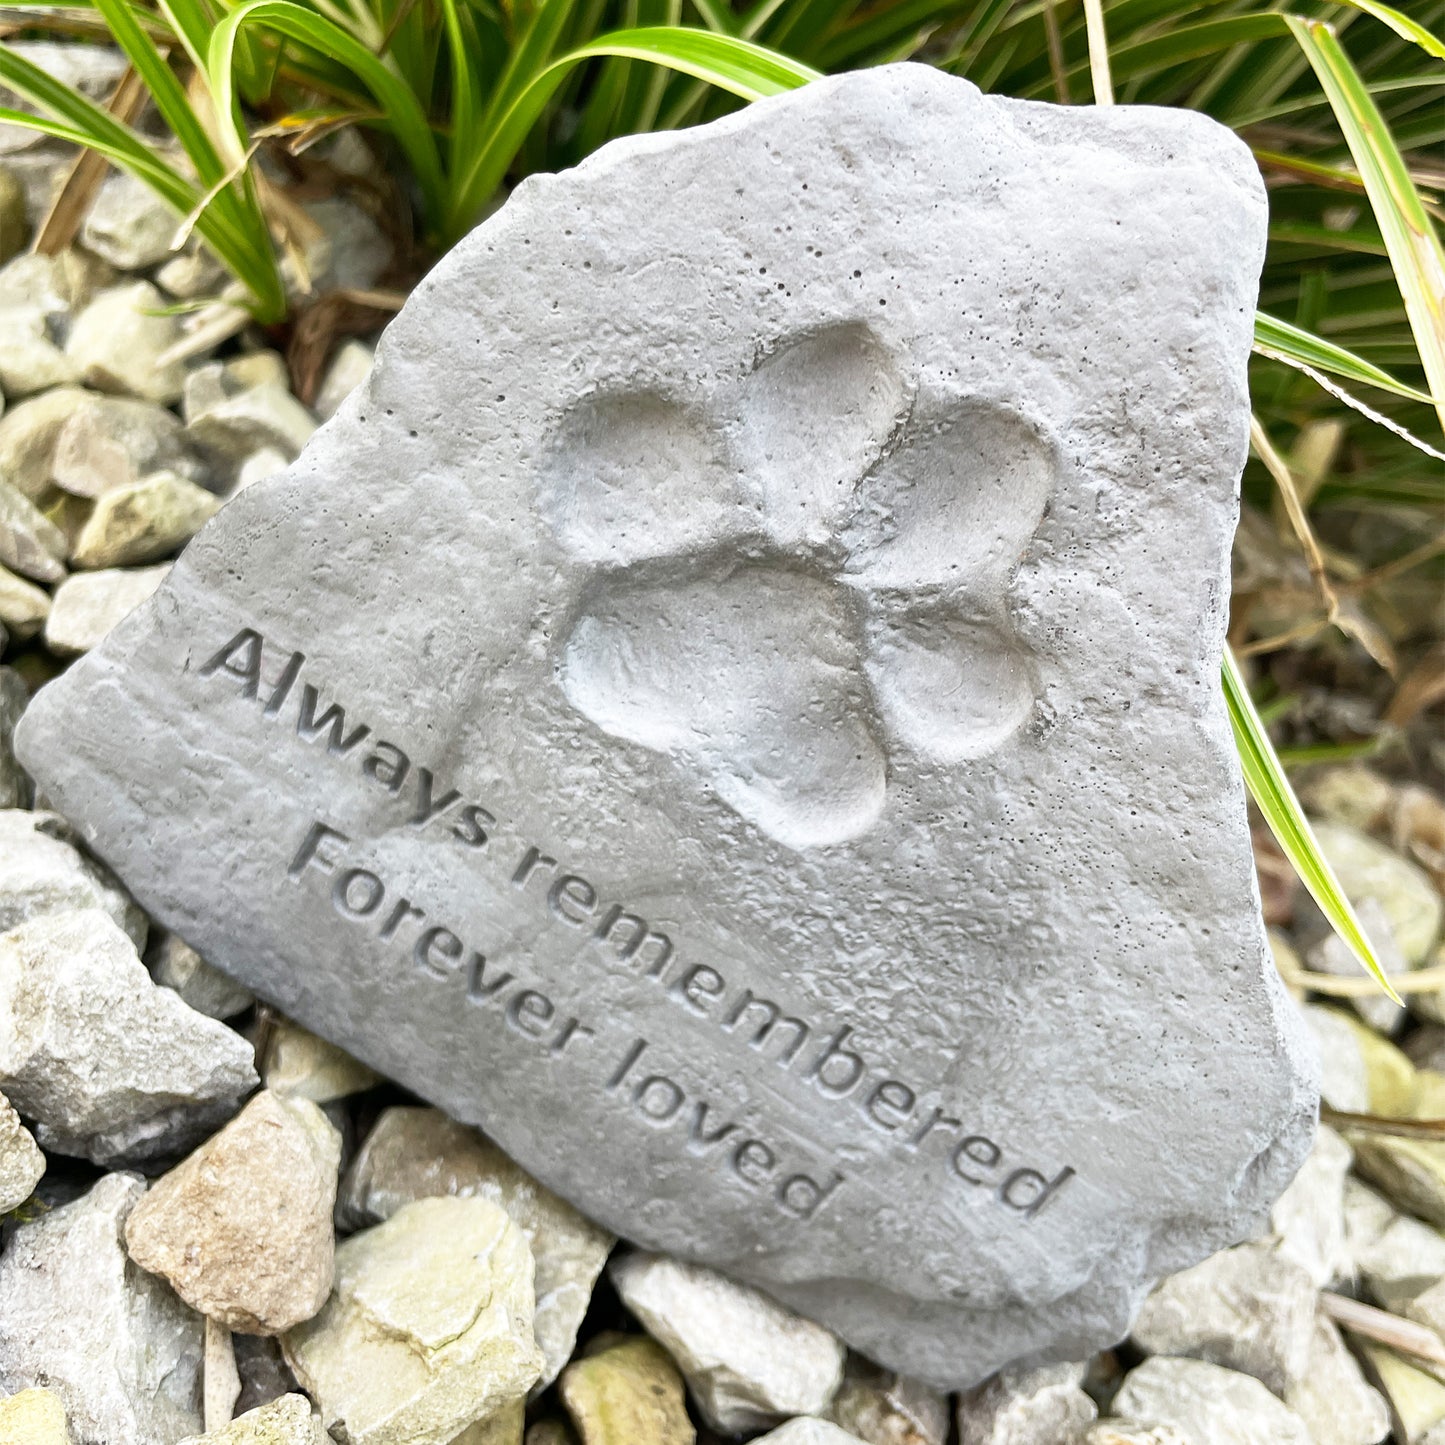 Pet Memorial Stone or Grave Marker